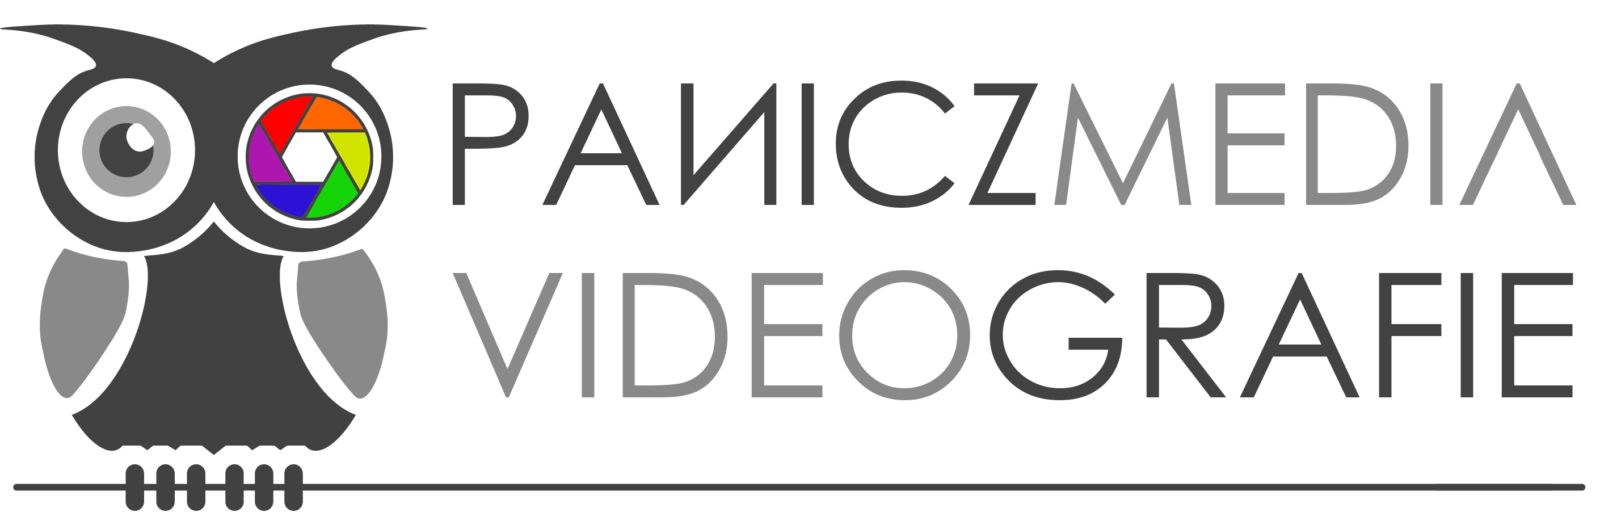 Panicz Media Videografie